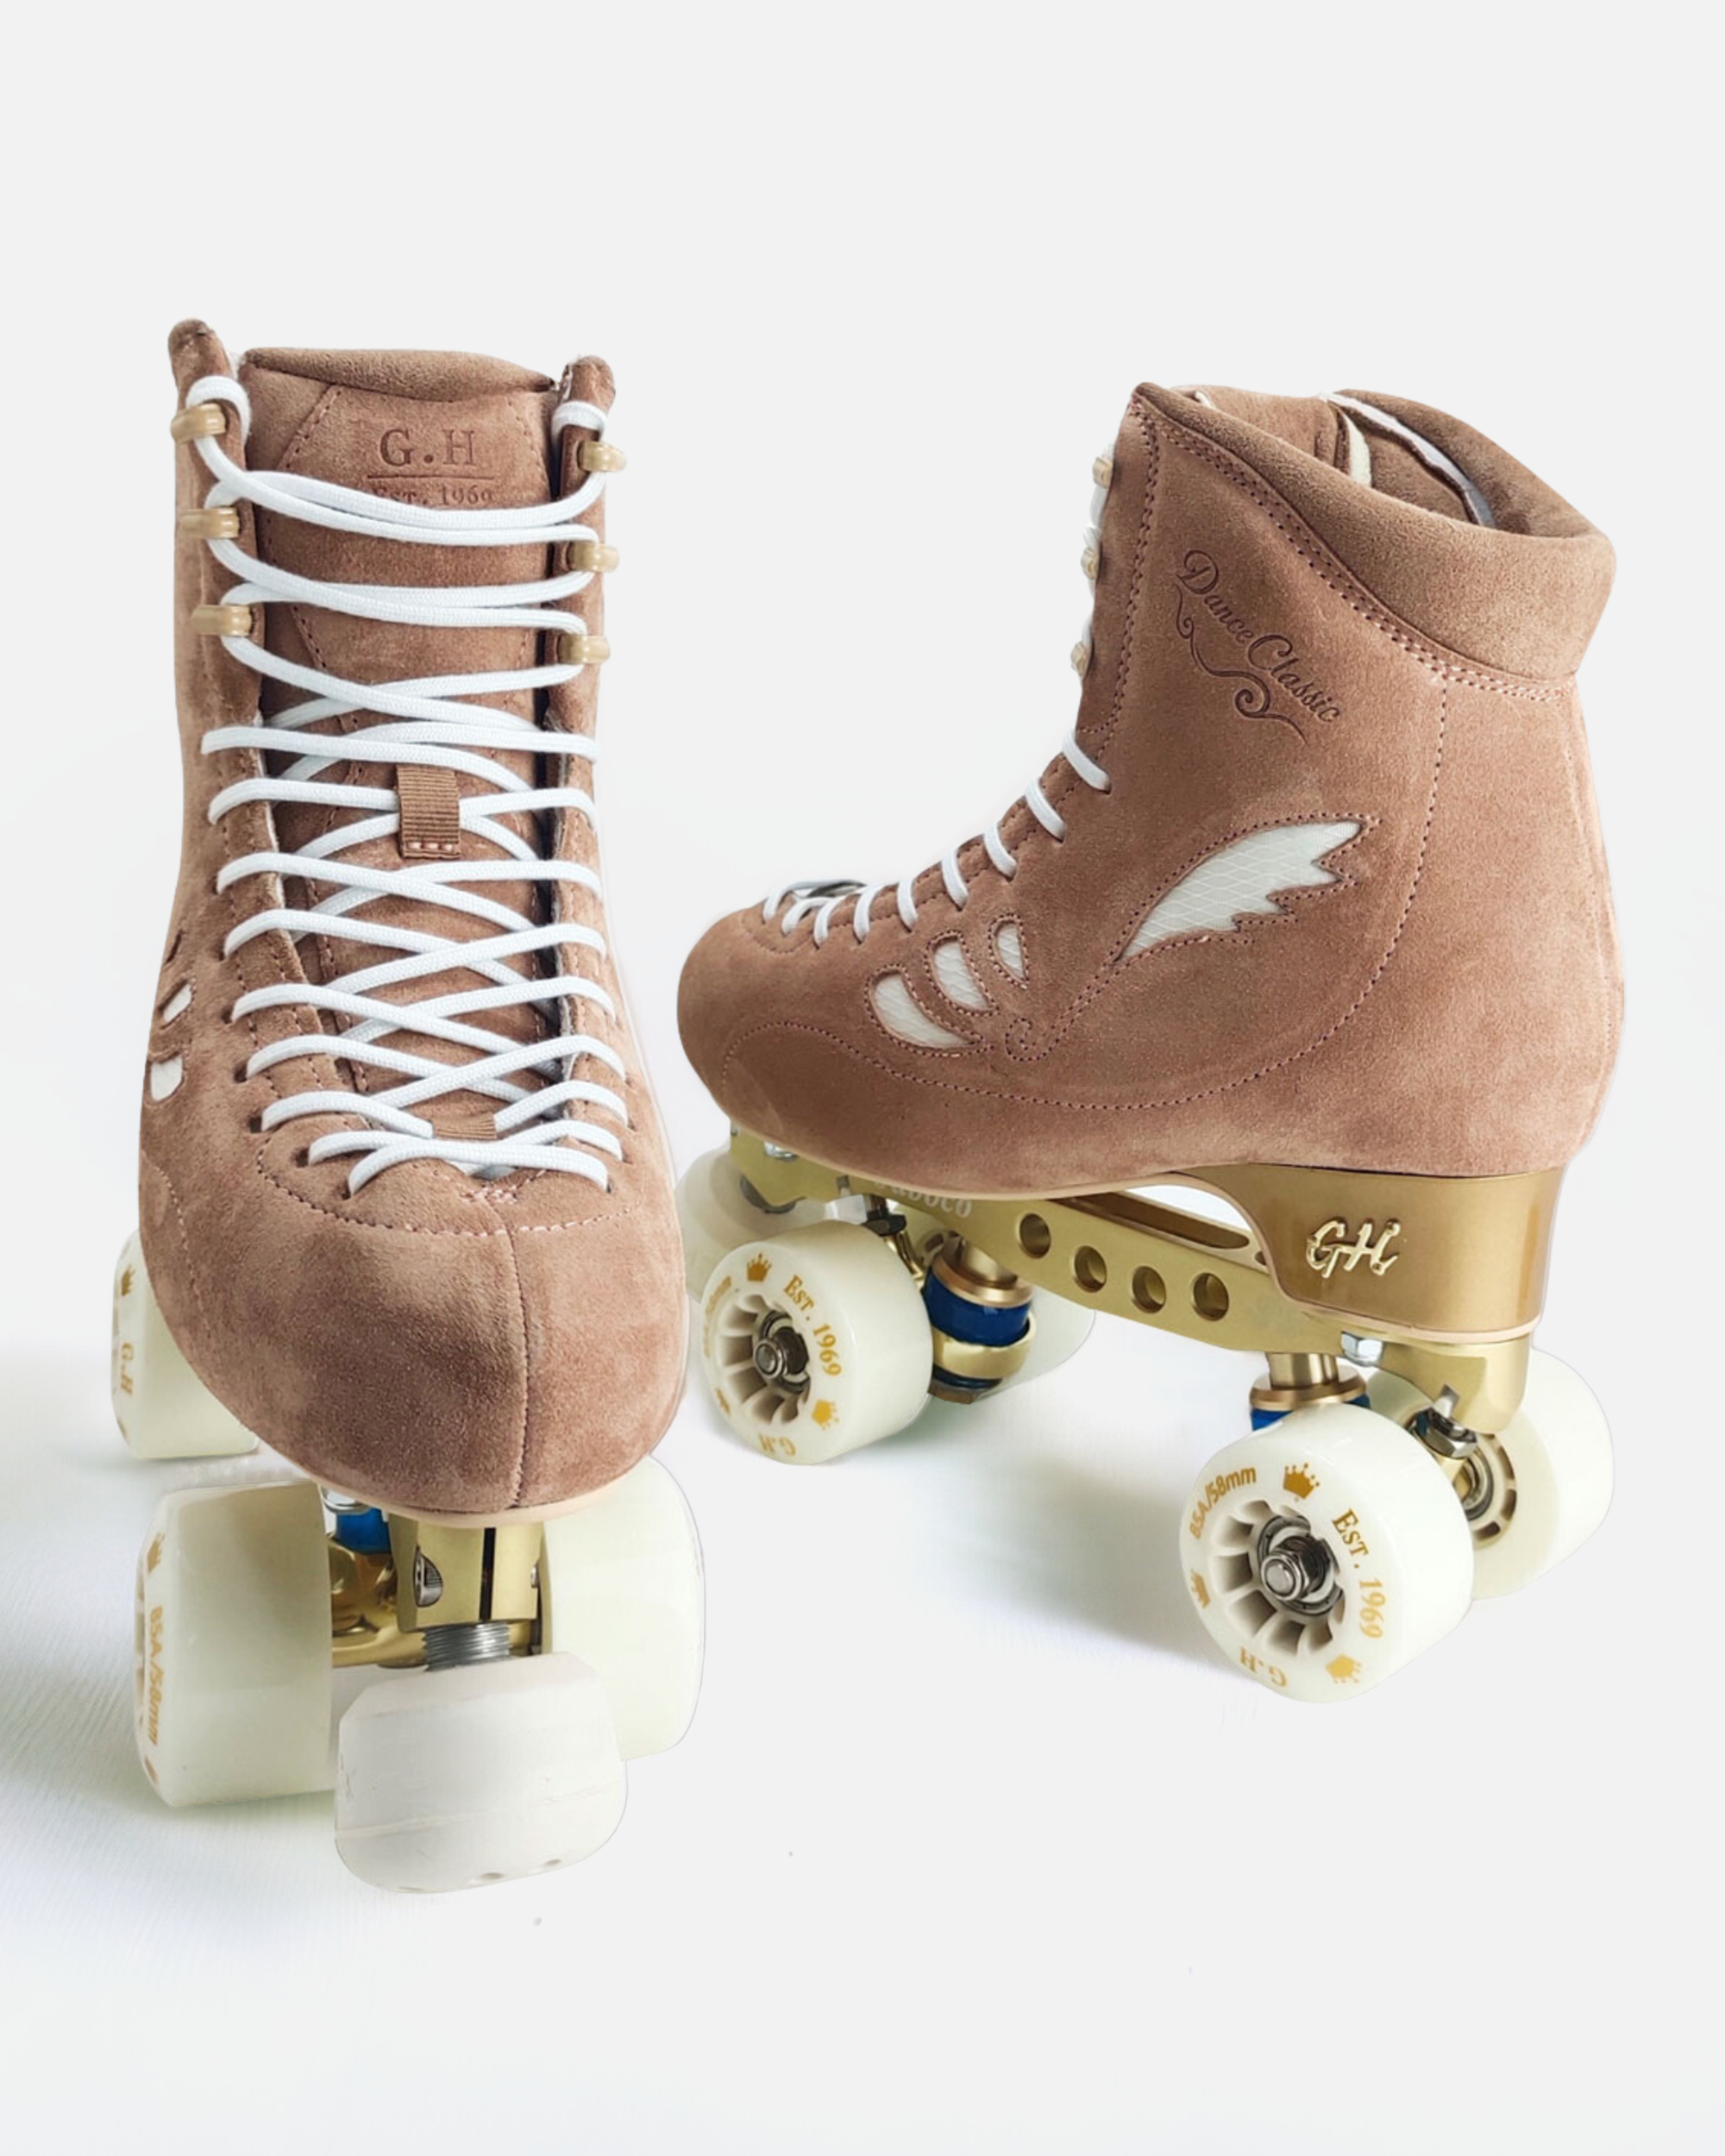 Dance classic quad roller skates (stiffer boots SR55) (Vanguard or Jaboco frame)